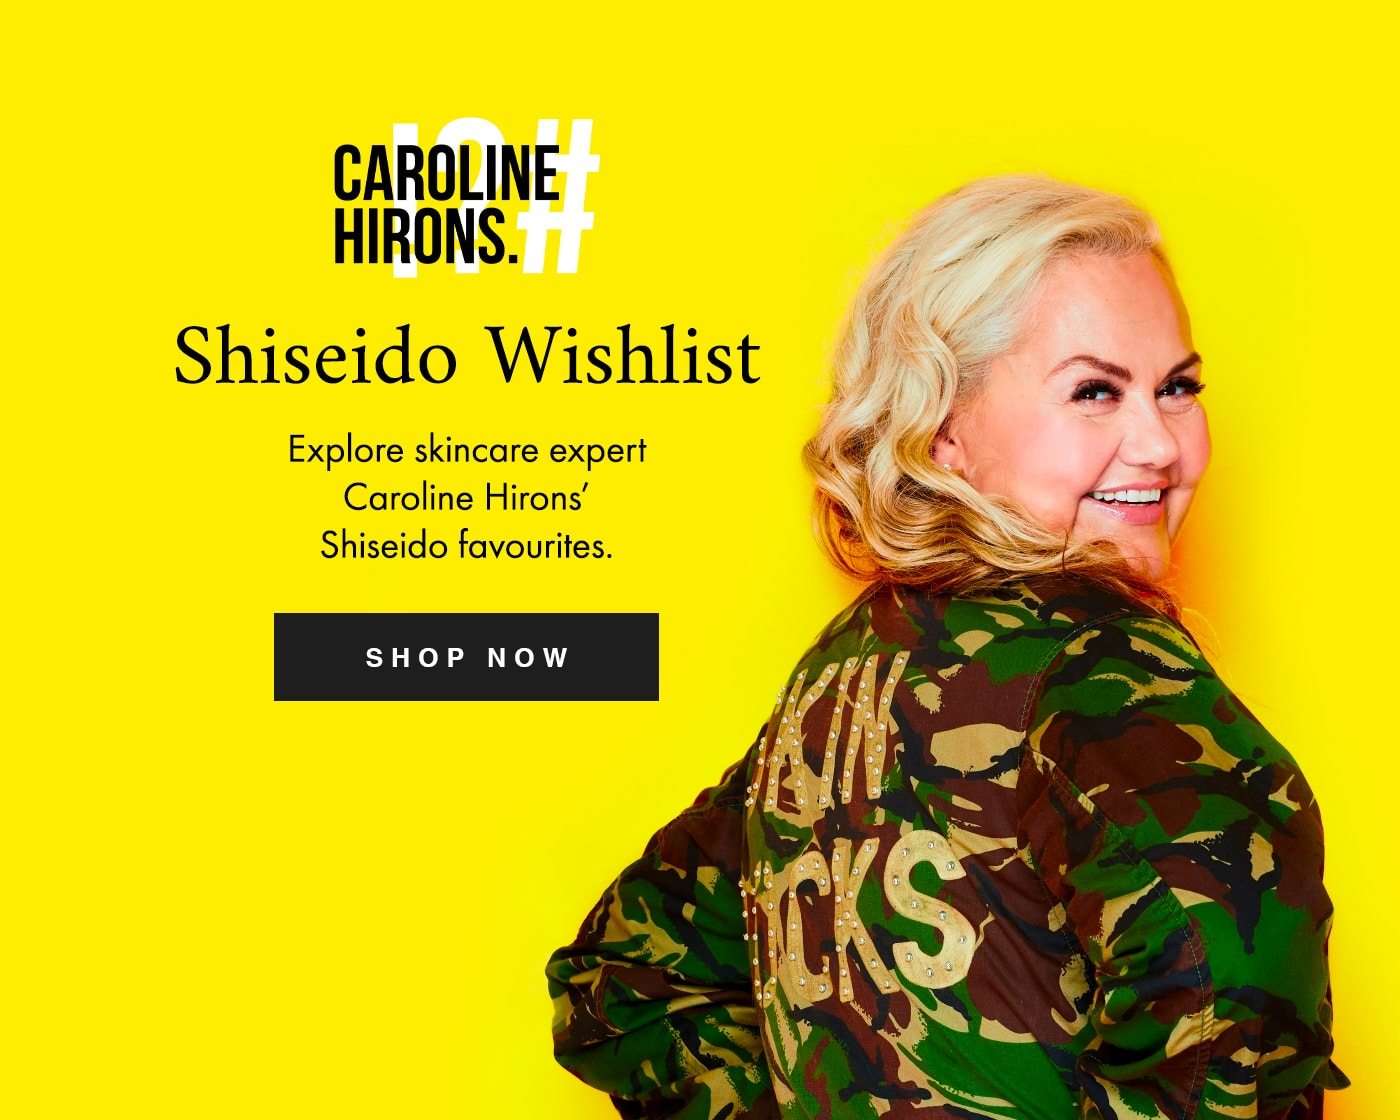 Caroline Hirons. Shiseido Wishlist Explore skincare expert Caroline Hirons' Shiseido favourites. SHOP NOW